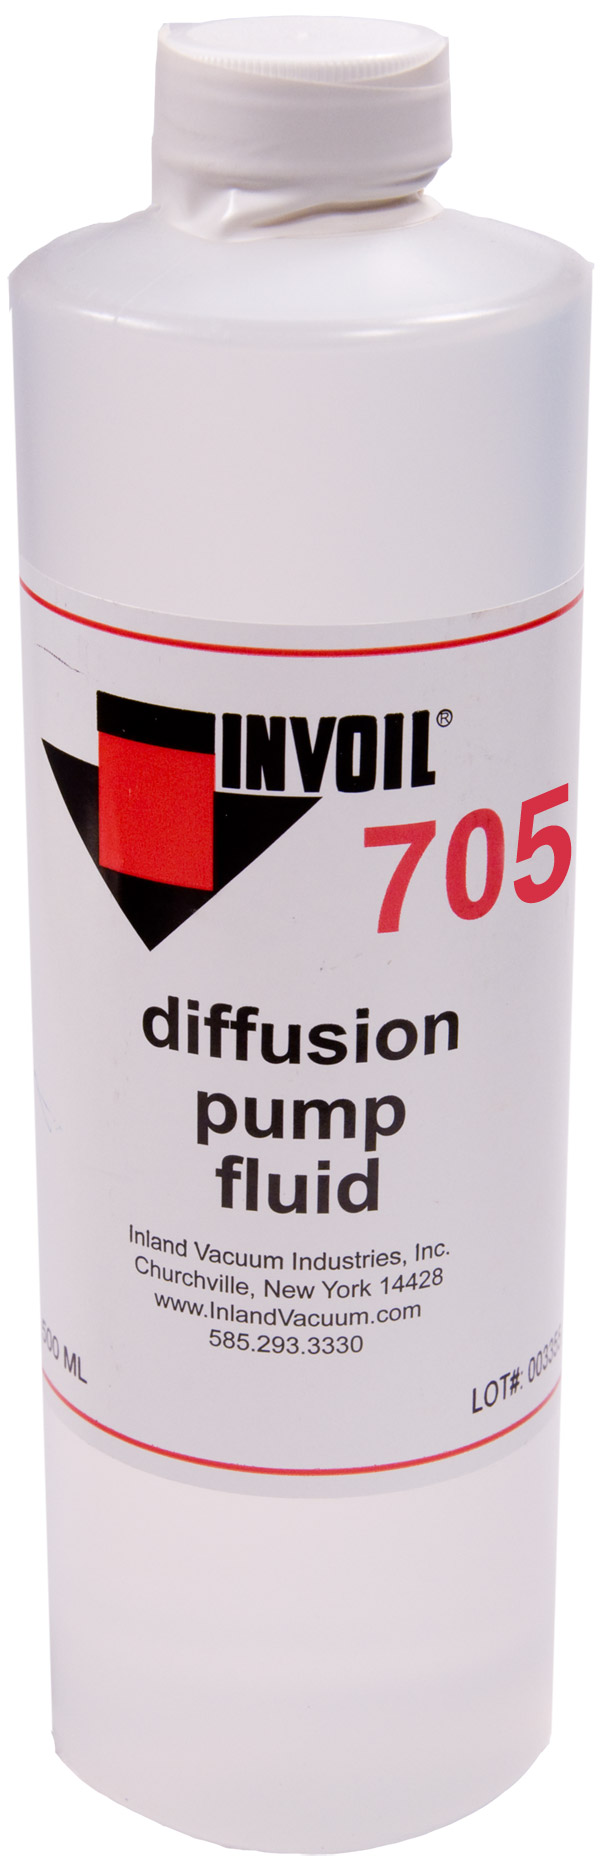 Invoil® 705 diffusion pump fluid